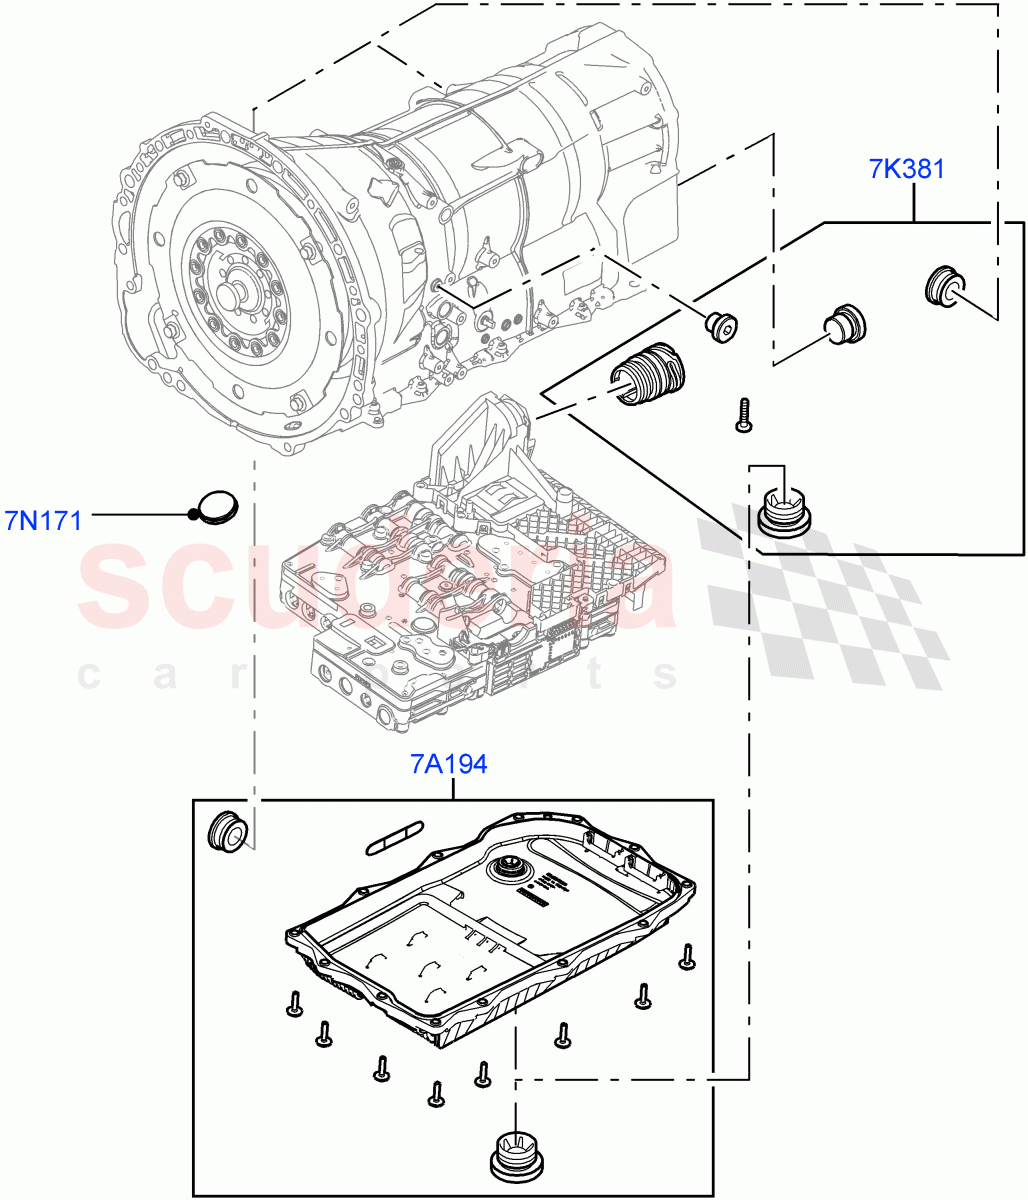 Transmission External Components(Nitra Plant Build)(2.0L I4 DSL HIGH DOHC AJ200,8 Speed Auto Trans ZF 8HP70 4WD,5.0 Petrol AJ133 DOHC CDA)((V)FROMK2000001) of Land Rover Land Rover Discovery 5 (2017+) [3.0 I6 Turbo Petrol AJ20P6]